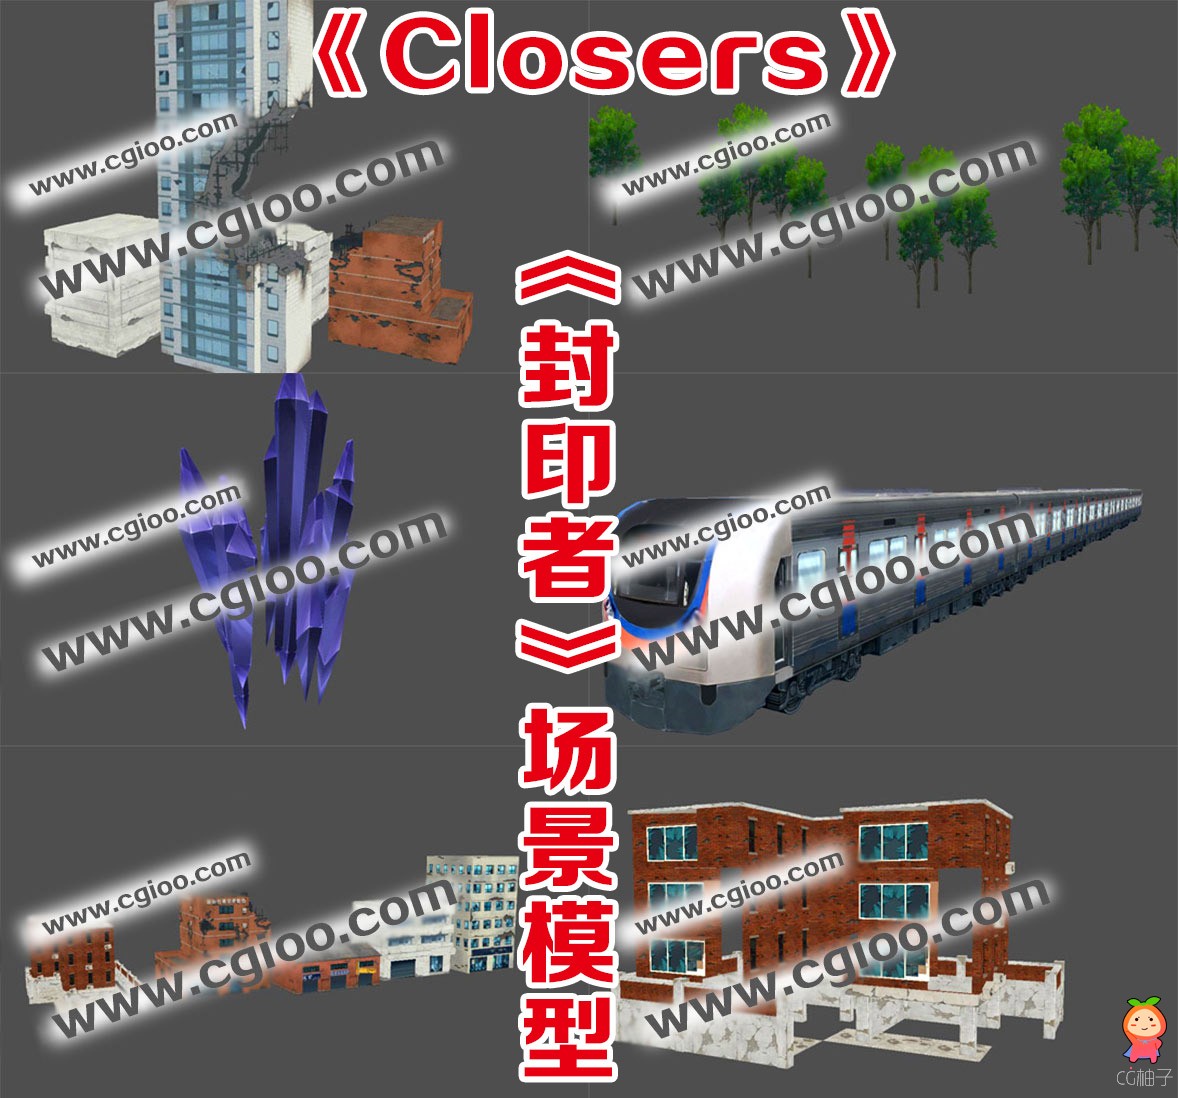 《Closers-封印者》游戏场景 现代都市场景 手绘贴图 fbx格式